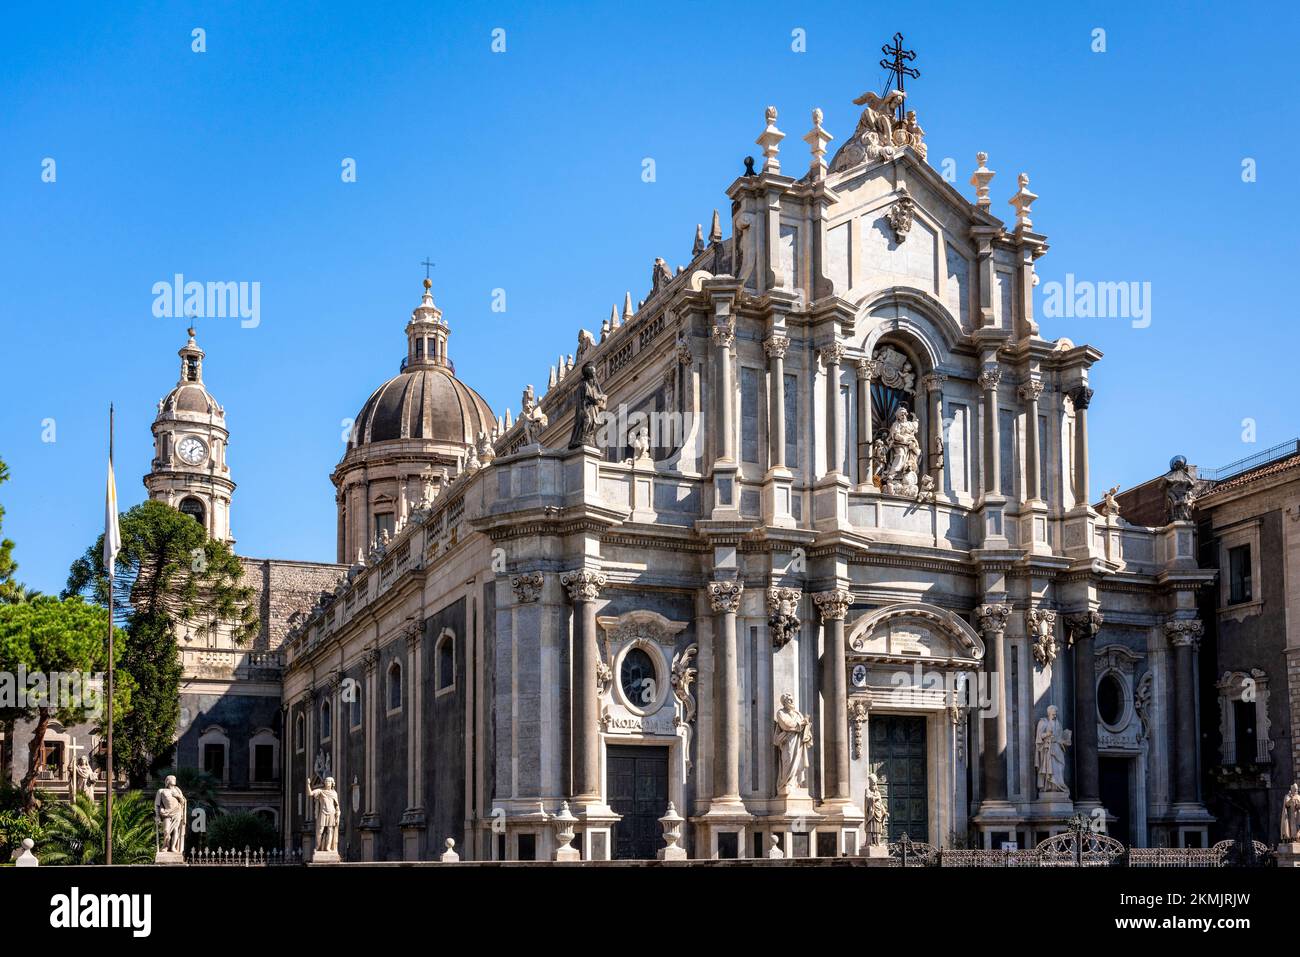 The Cathedral of Sant'Agata, Catania, Sicily, Italy. Stock Photo